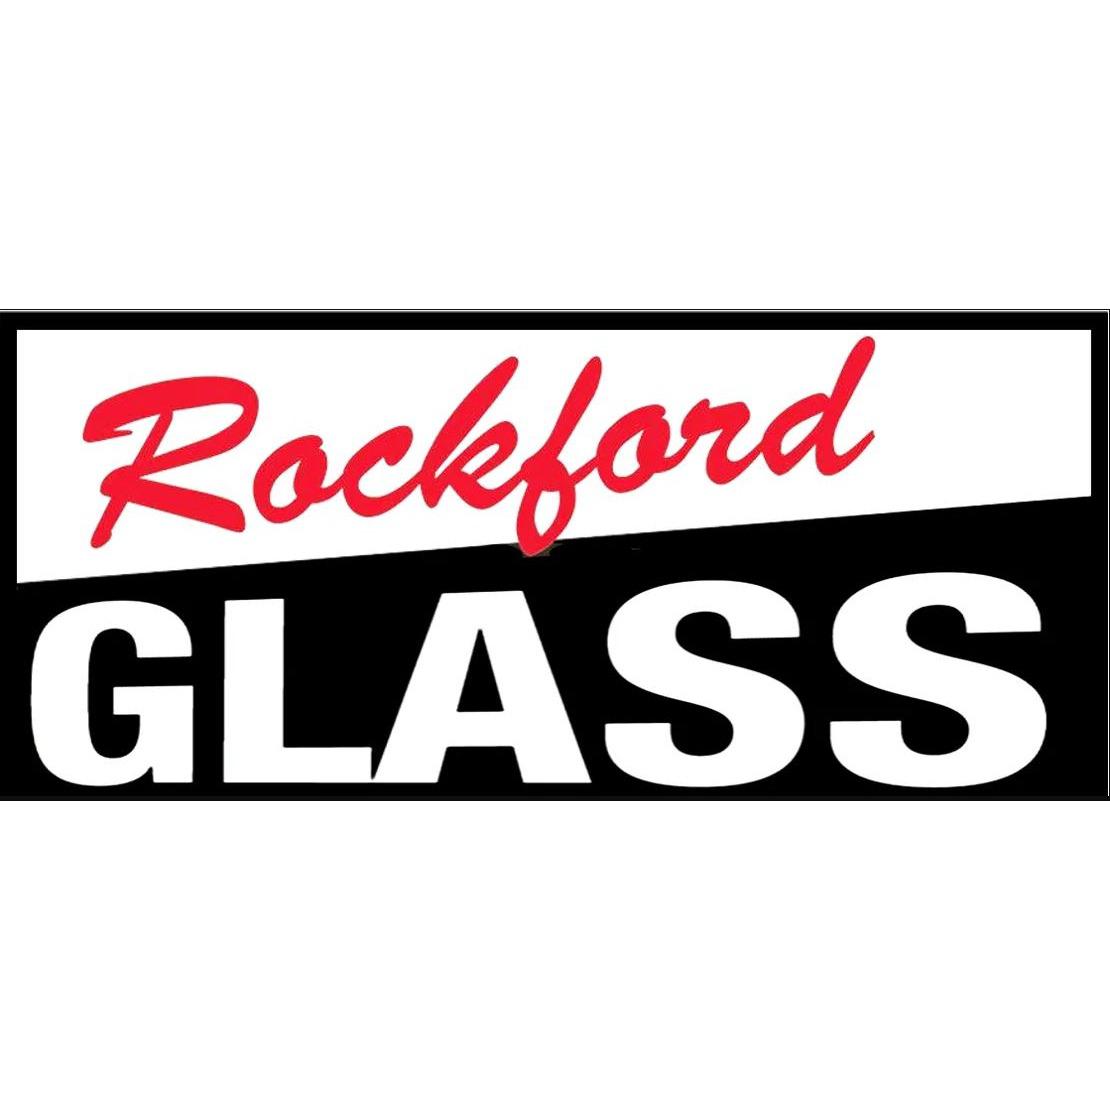 Rockford Glass - Rockford, IL 61108-2902 - (815)426-1162 | ShowMeLocal.com